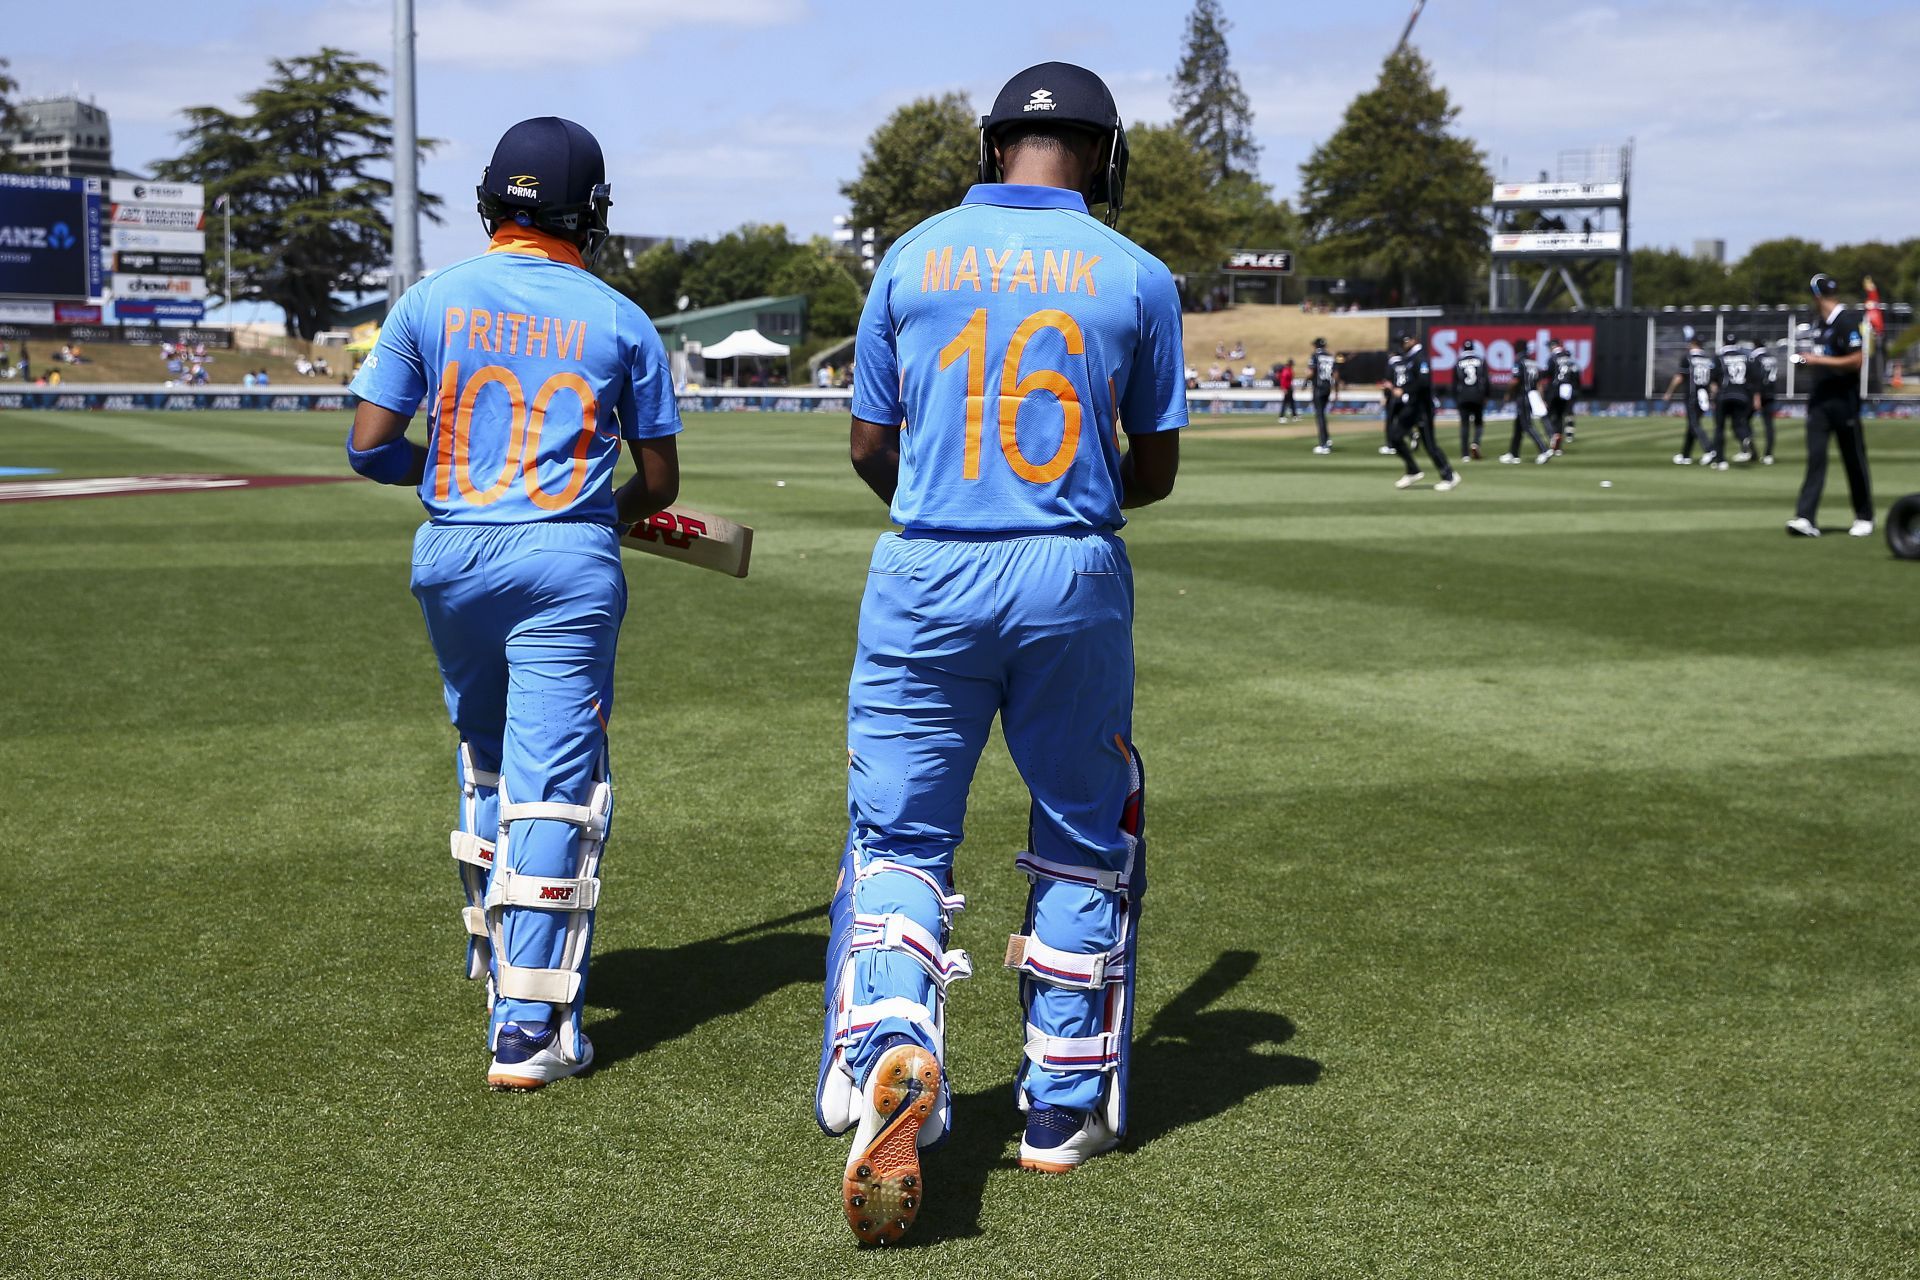 New Zealand v India - ODI: Game 1 (Image: Getty)